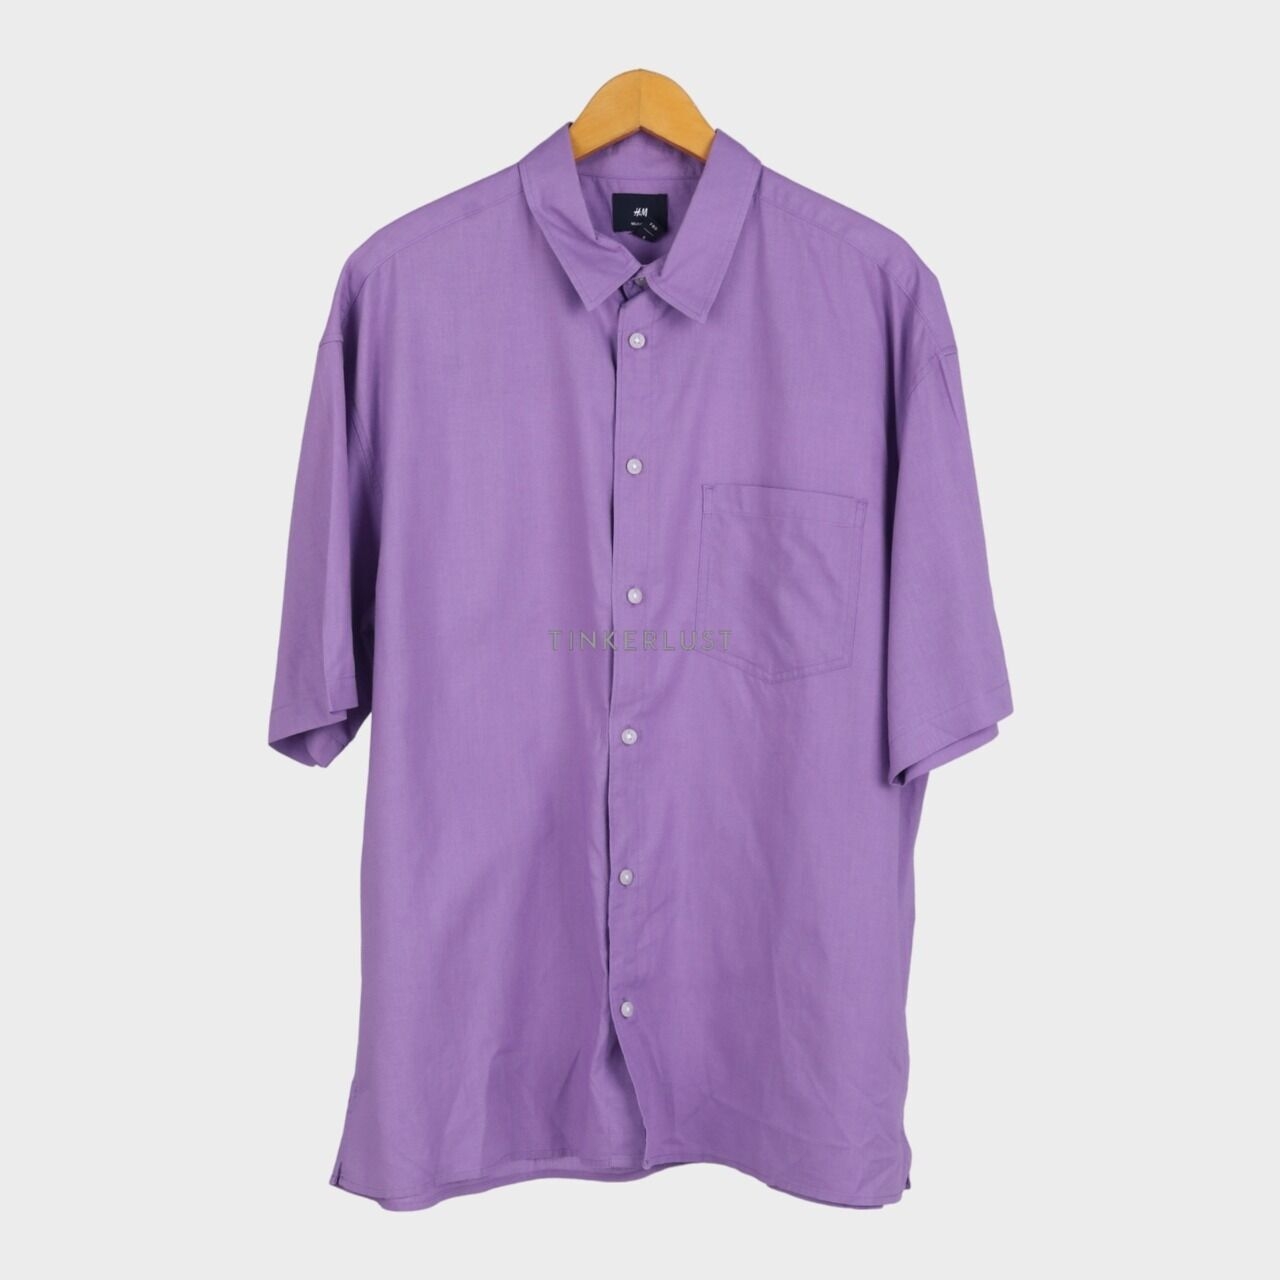 H&M Purple Shirt